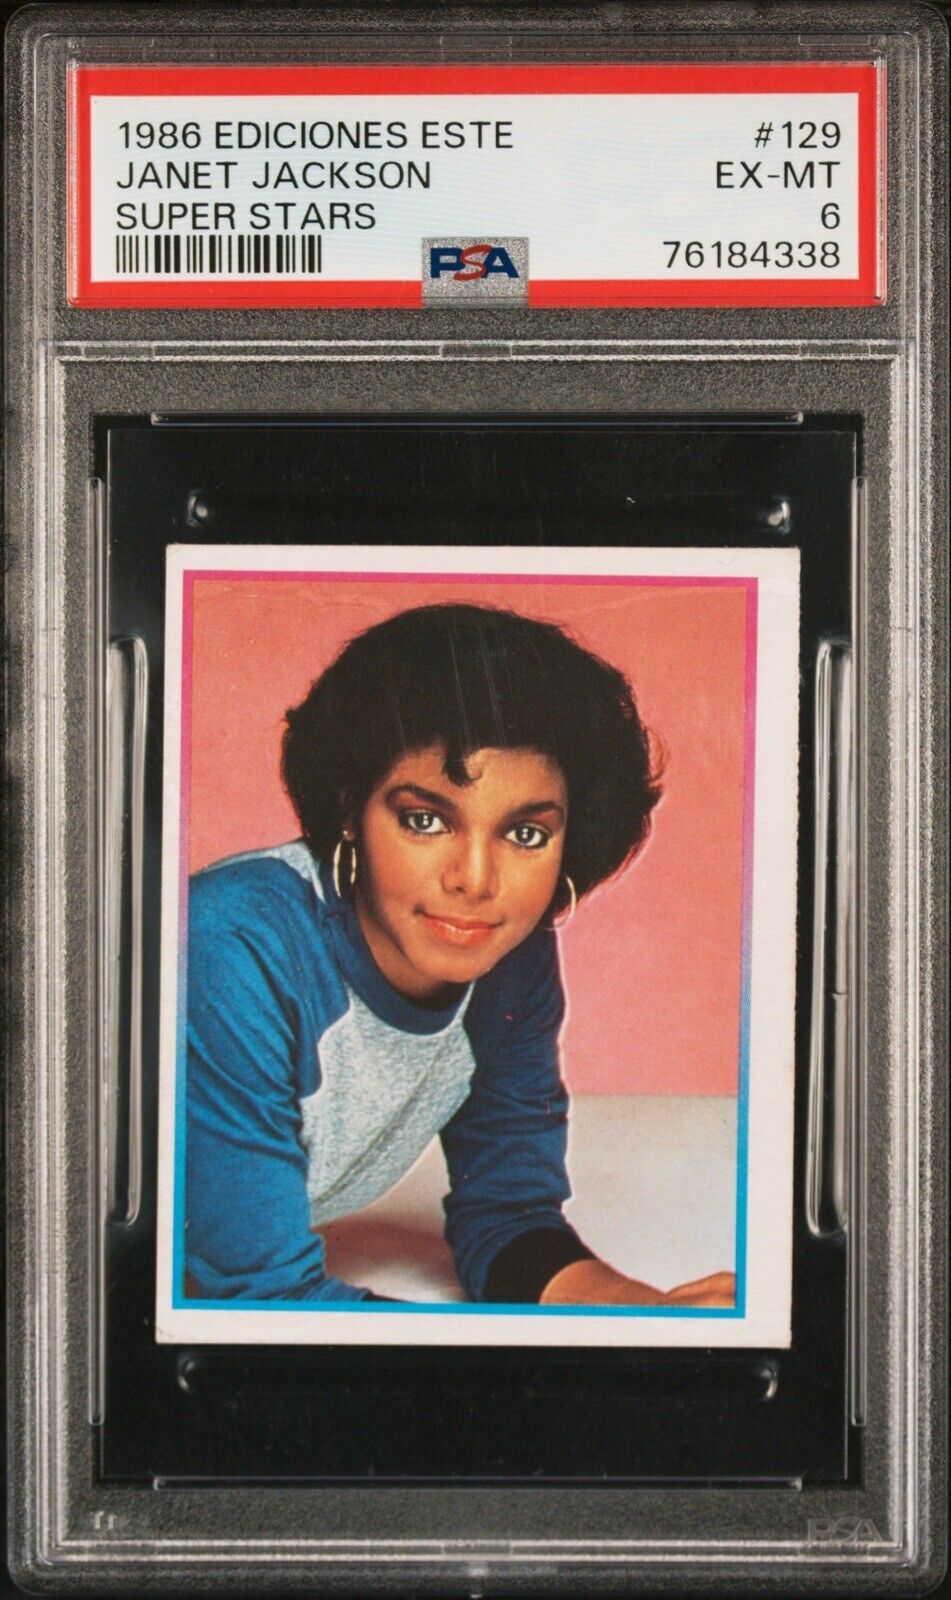 1986 Ediciones Este #129 Janet Jackson PSA 6 EX-MT Rookie RC - None Higher